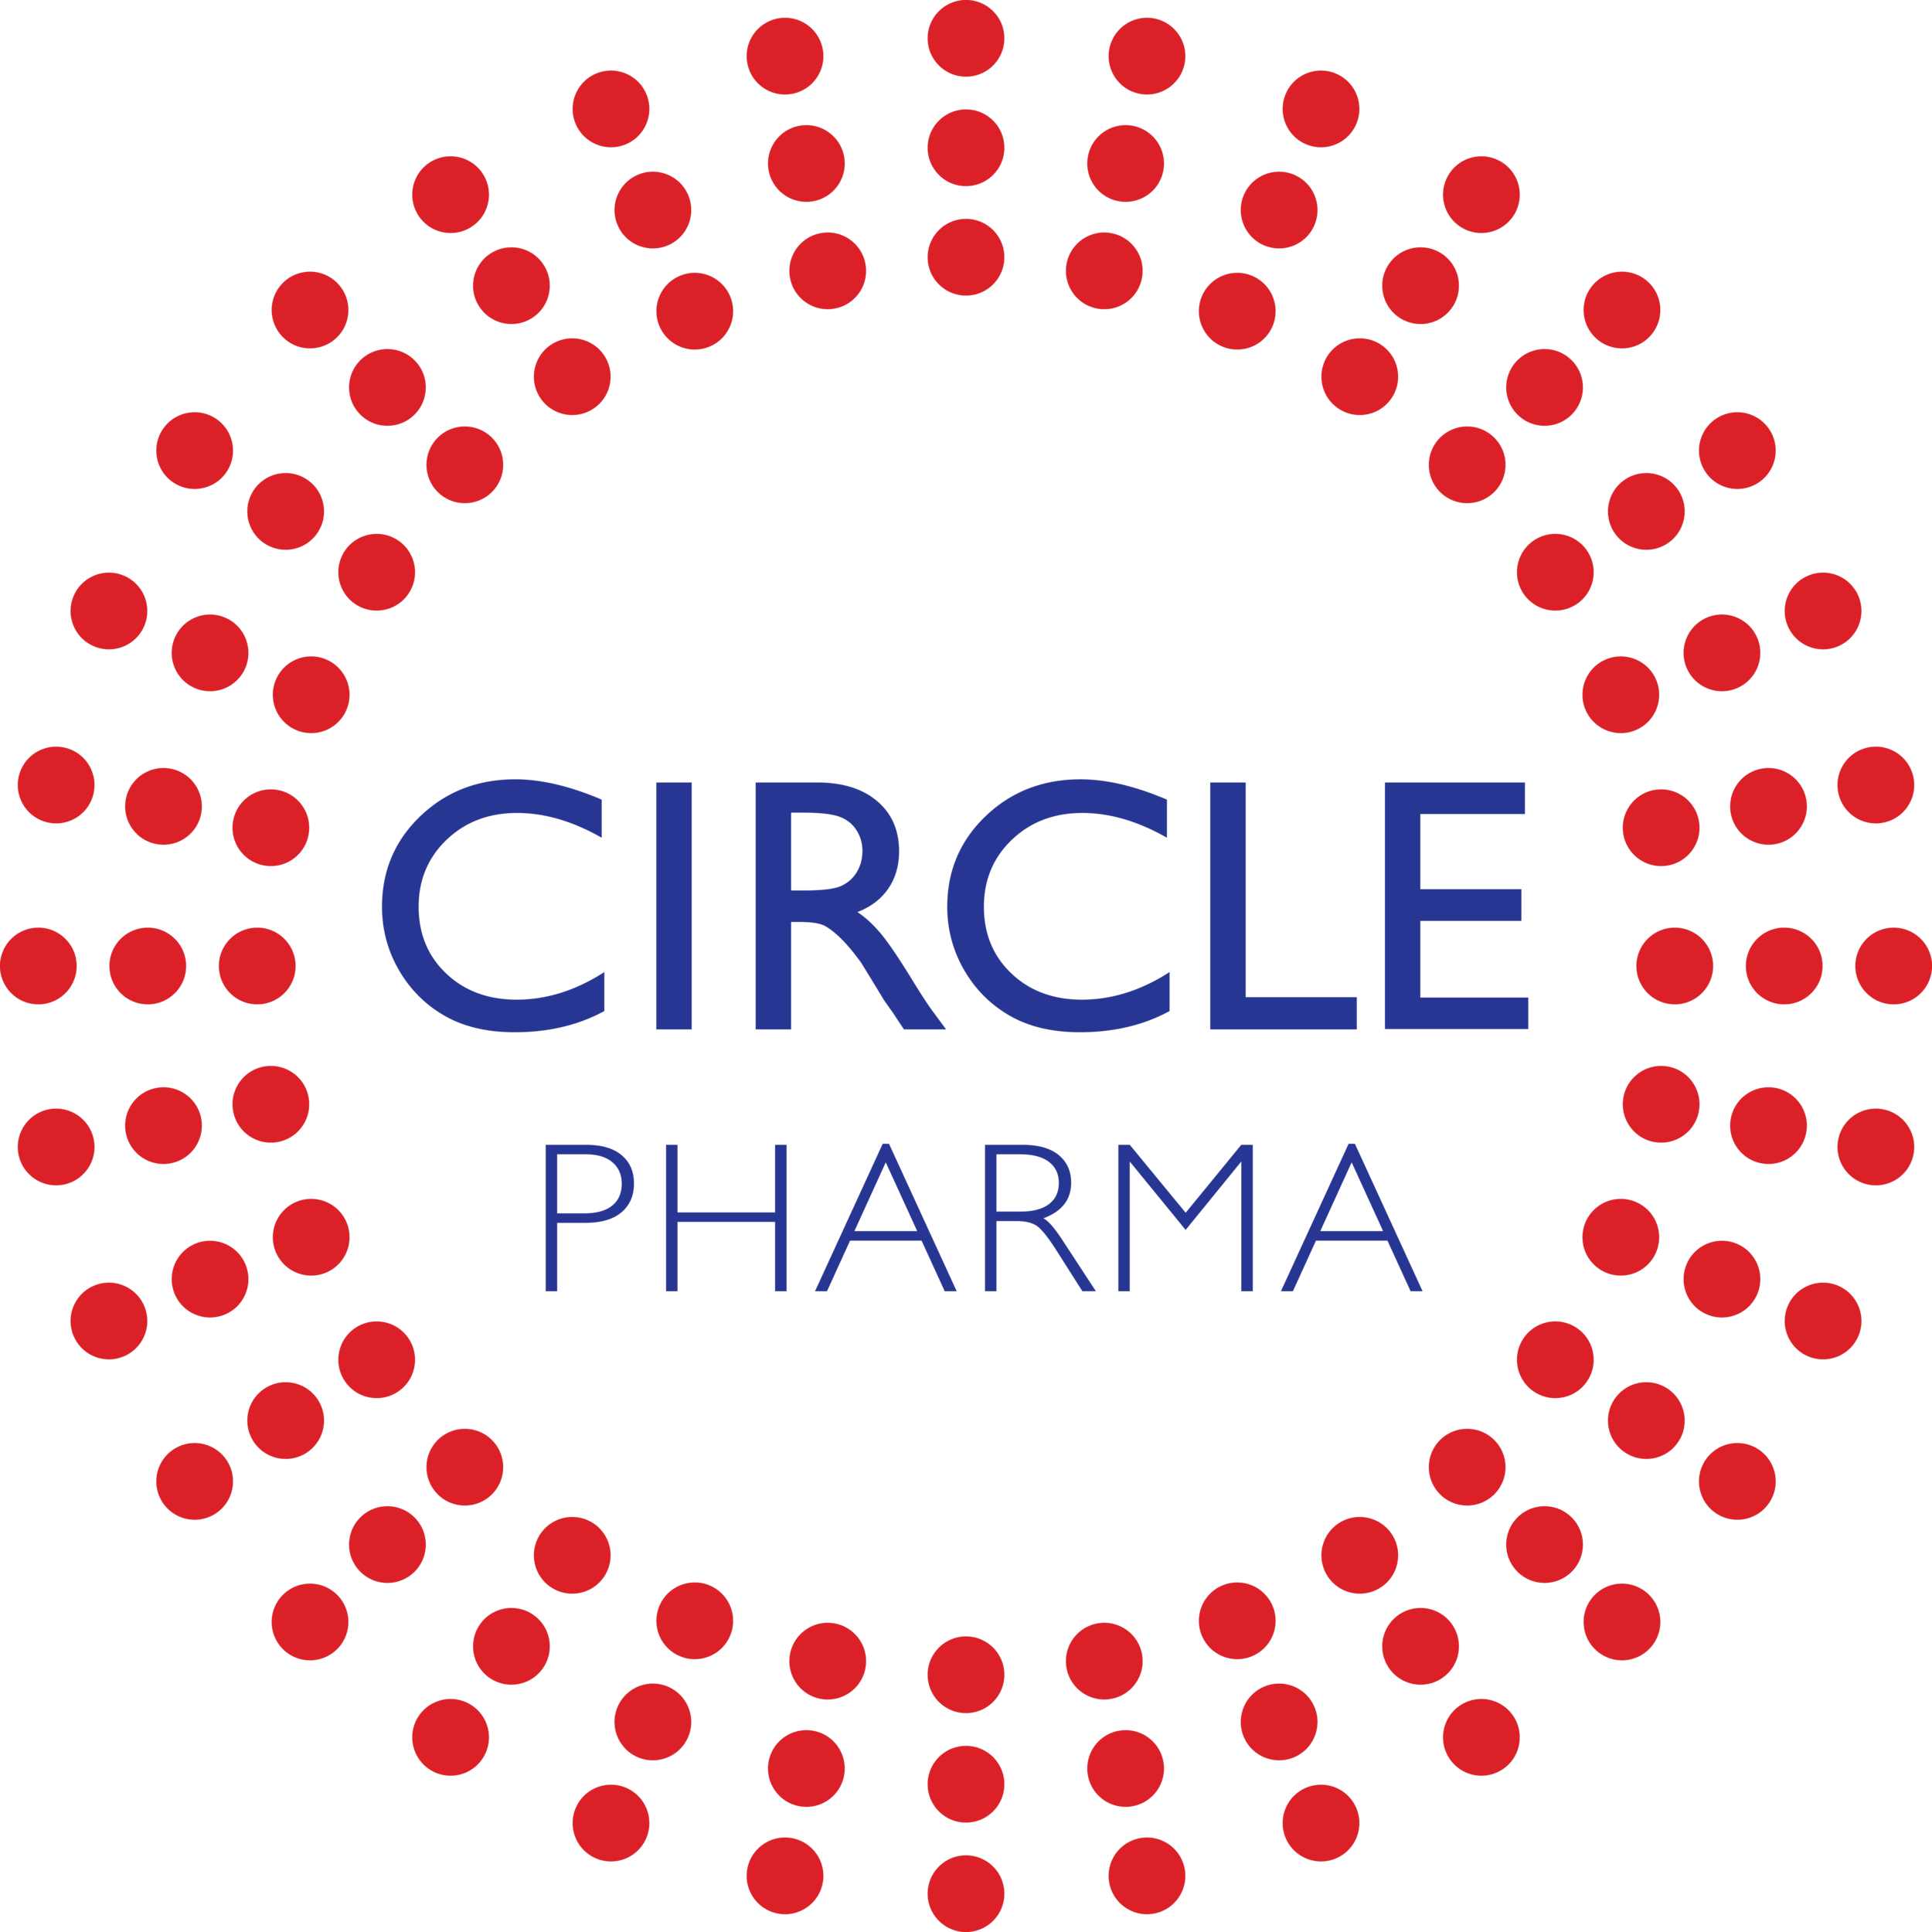 Circle Pharma Transparent 05_28_19.png